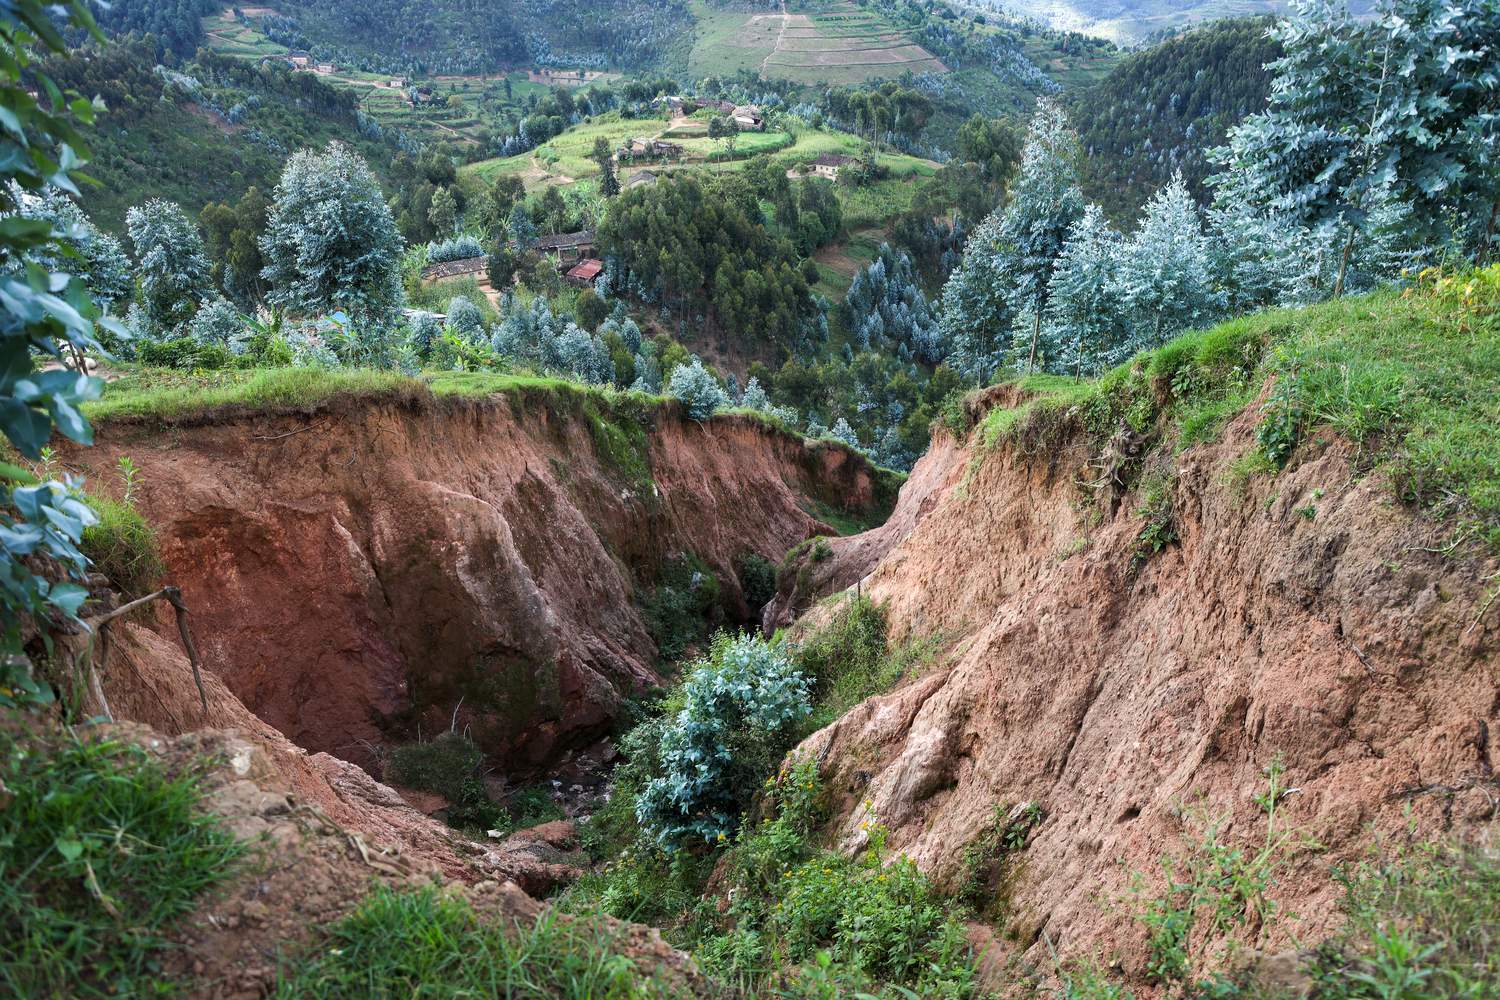 A ravine of exposed soil runs through a lush landscape in Rwanda.